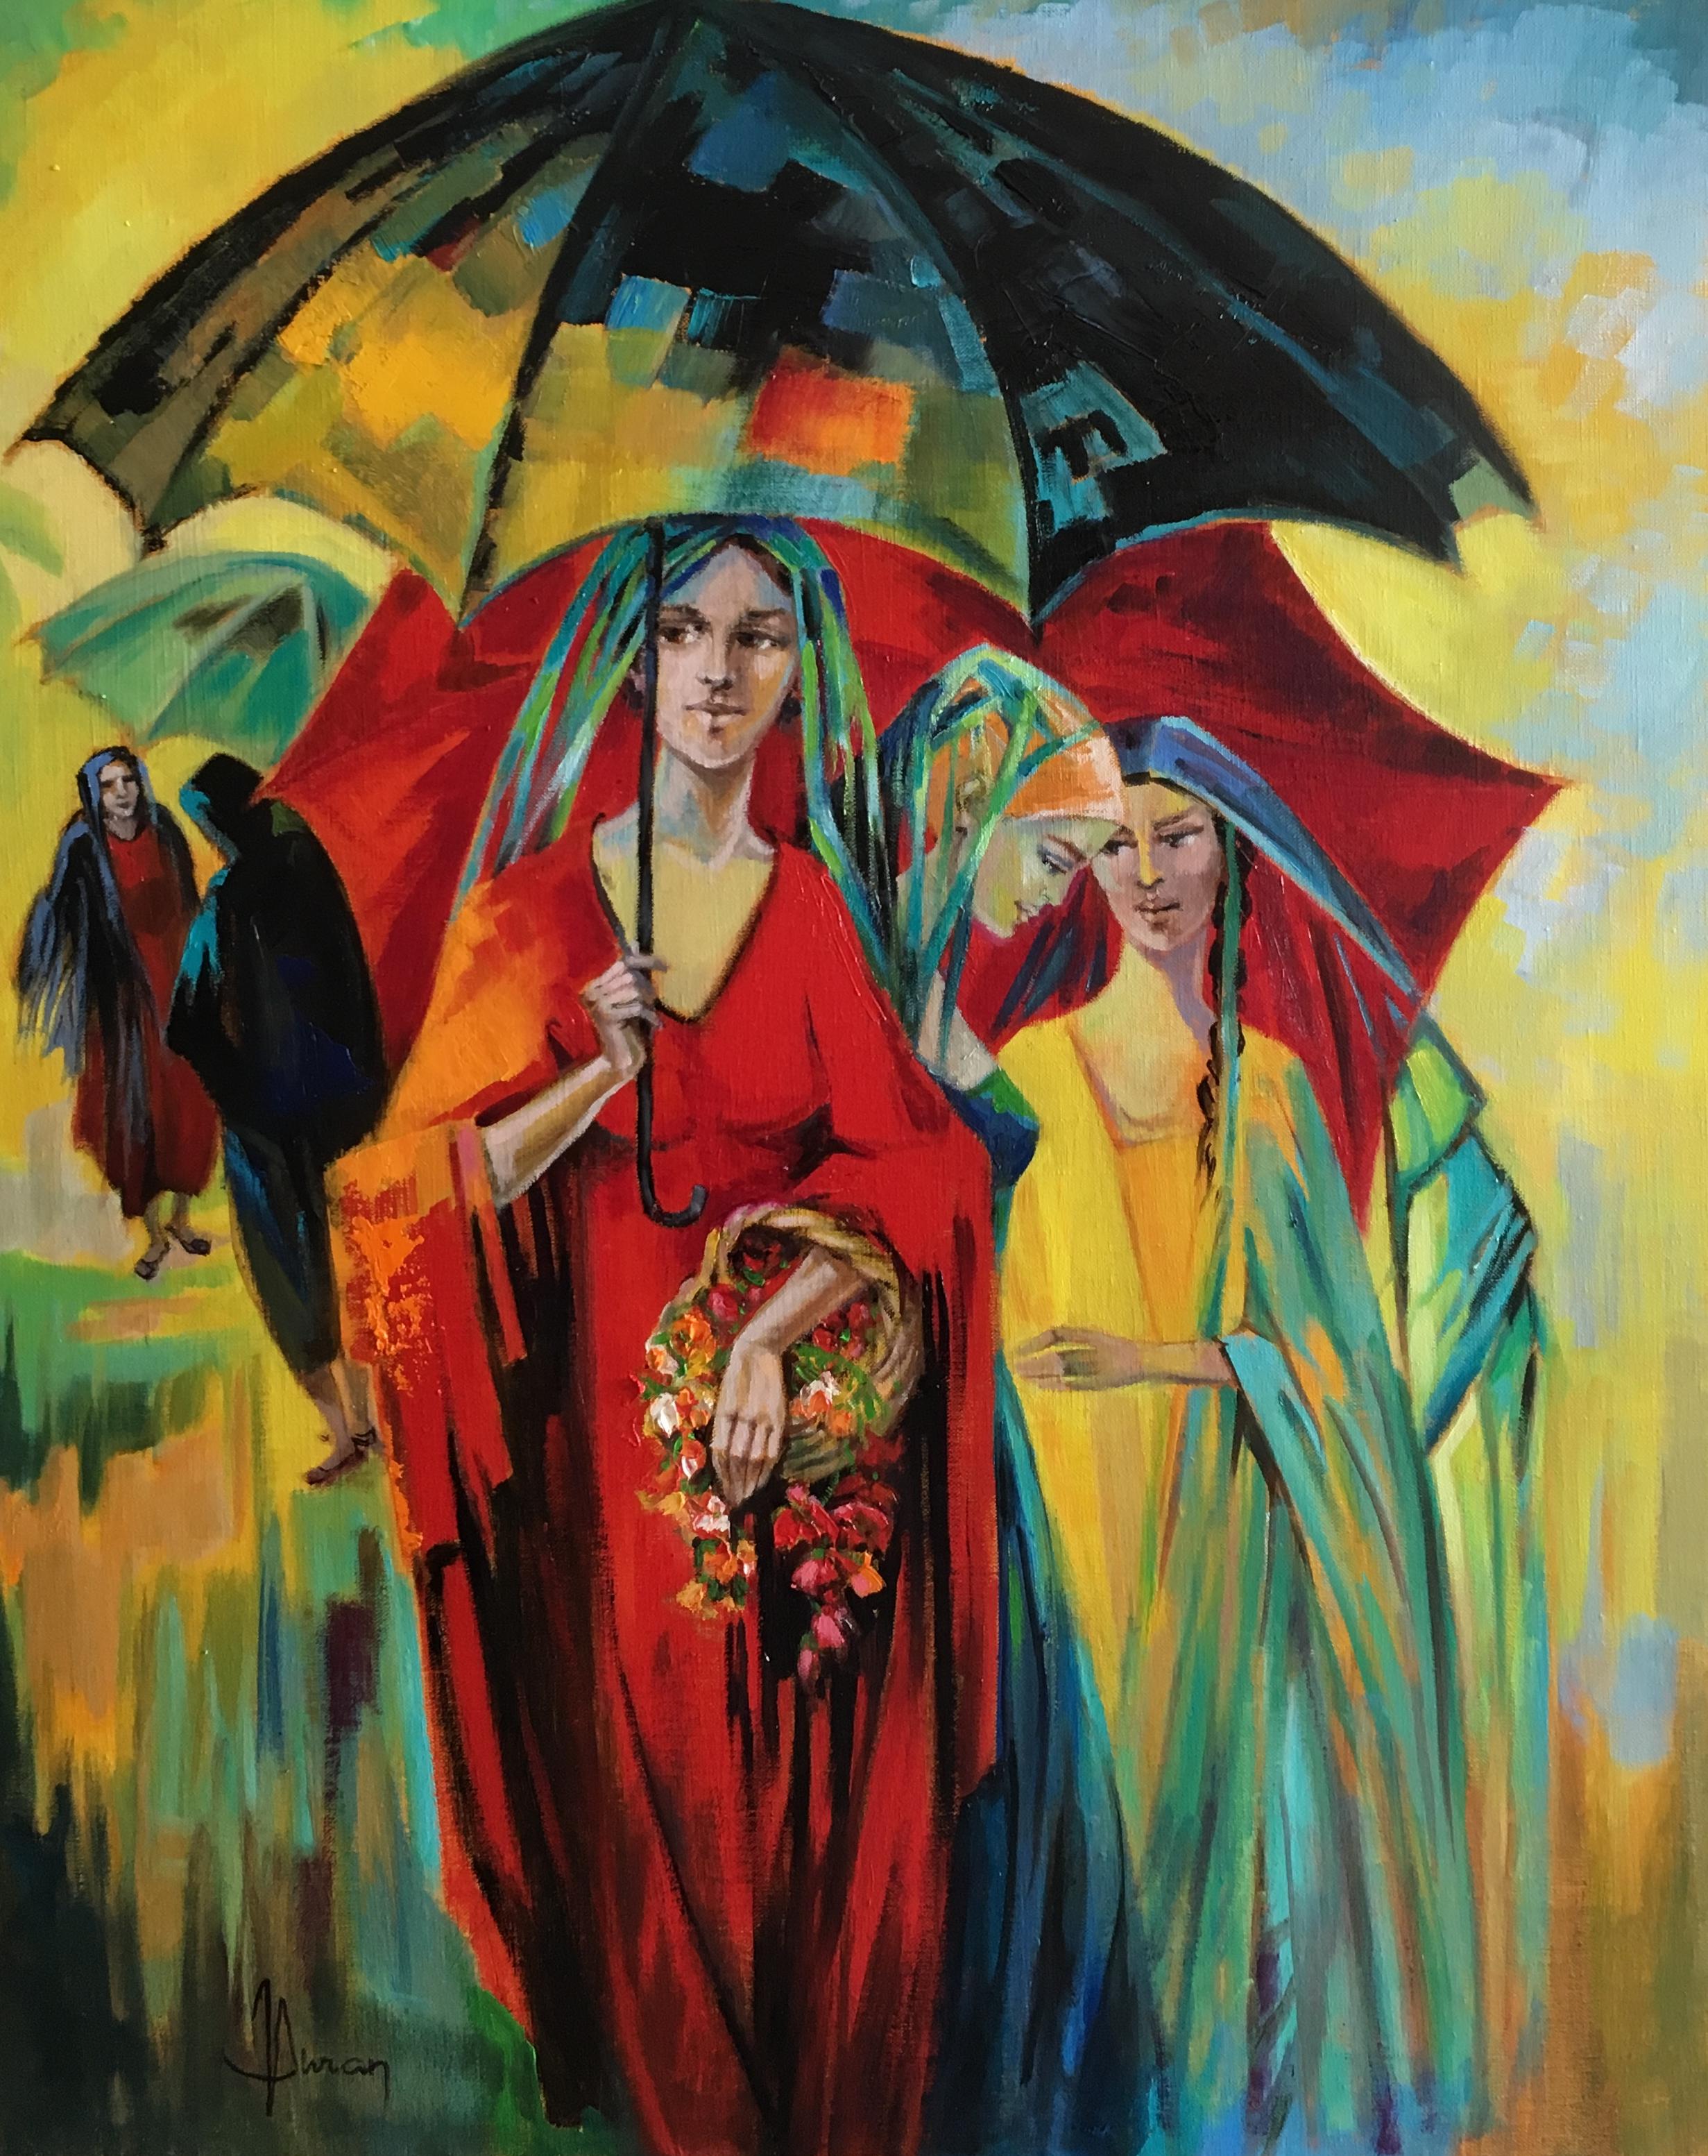 Jori Duran Figurative Painting – The umbrellas, oil on canvas, expressionist style